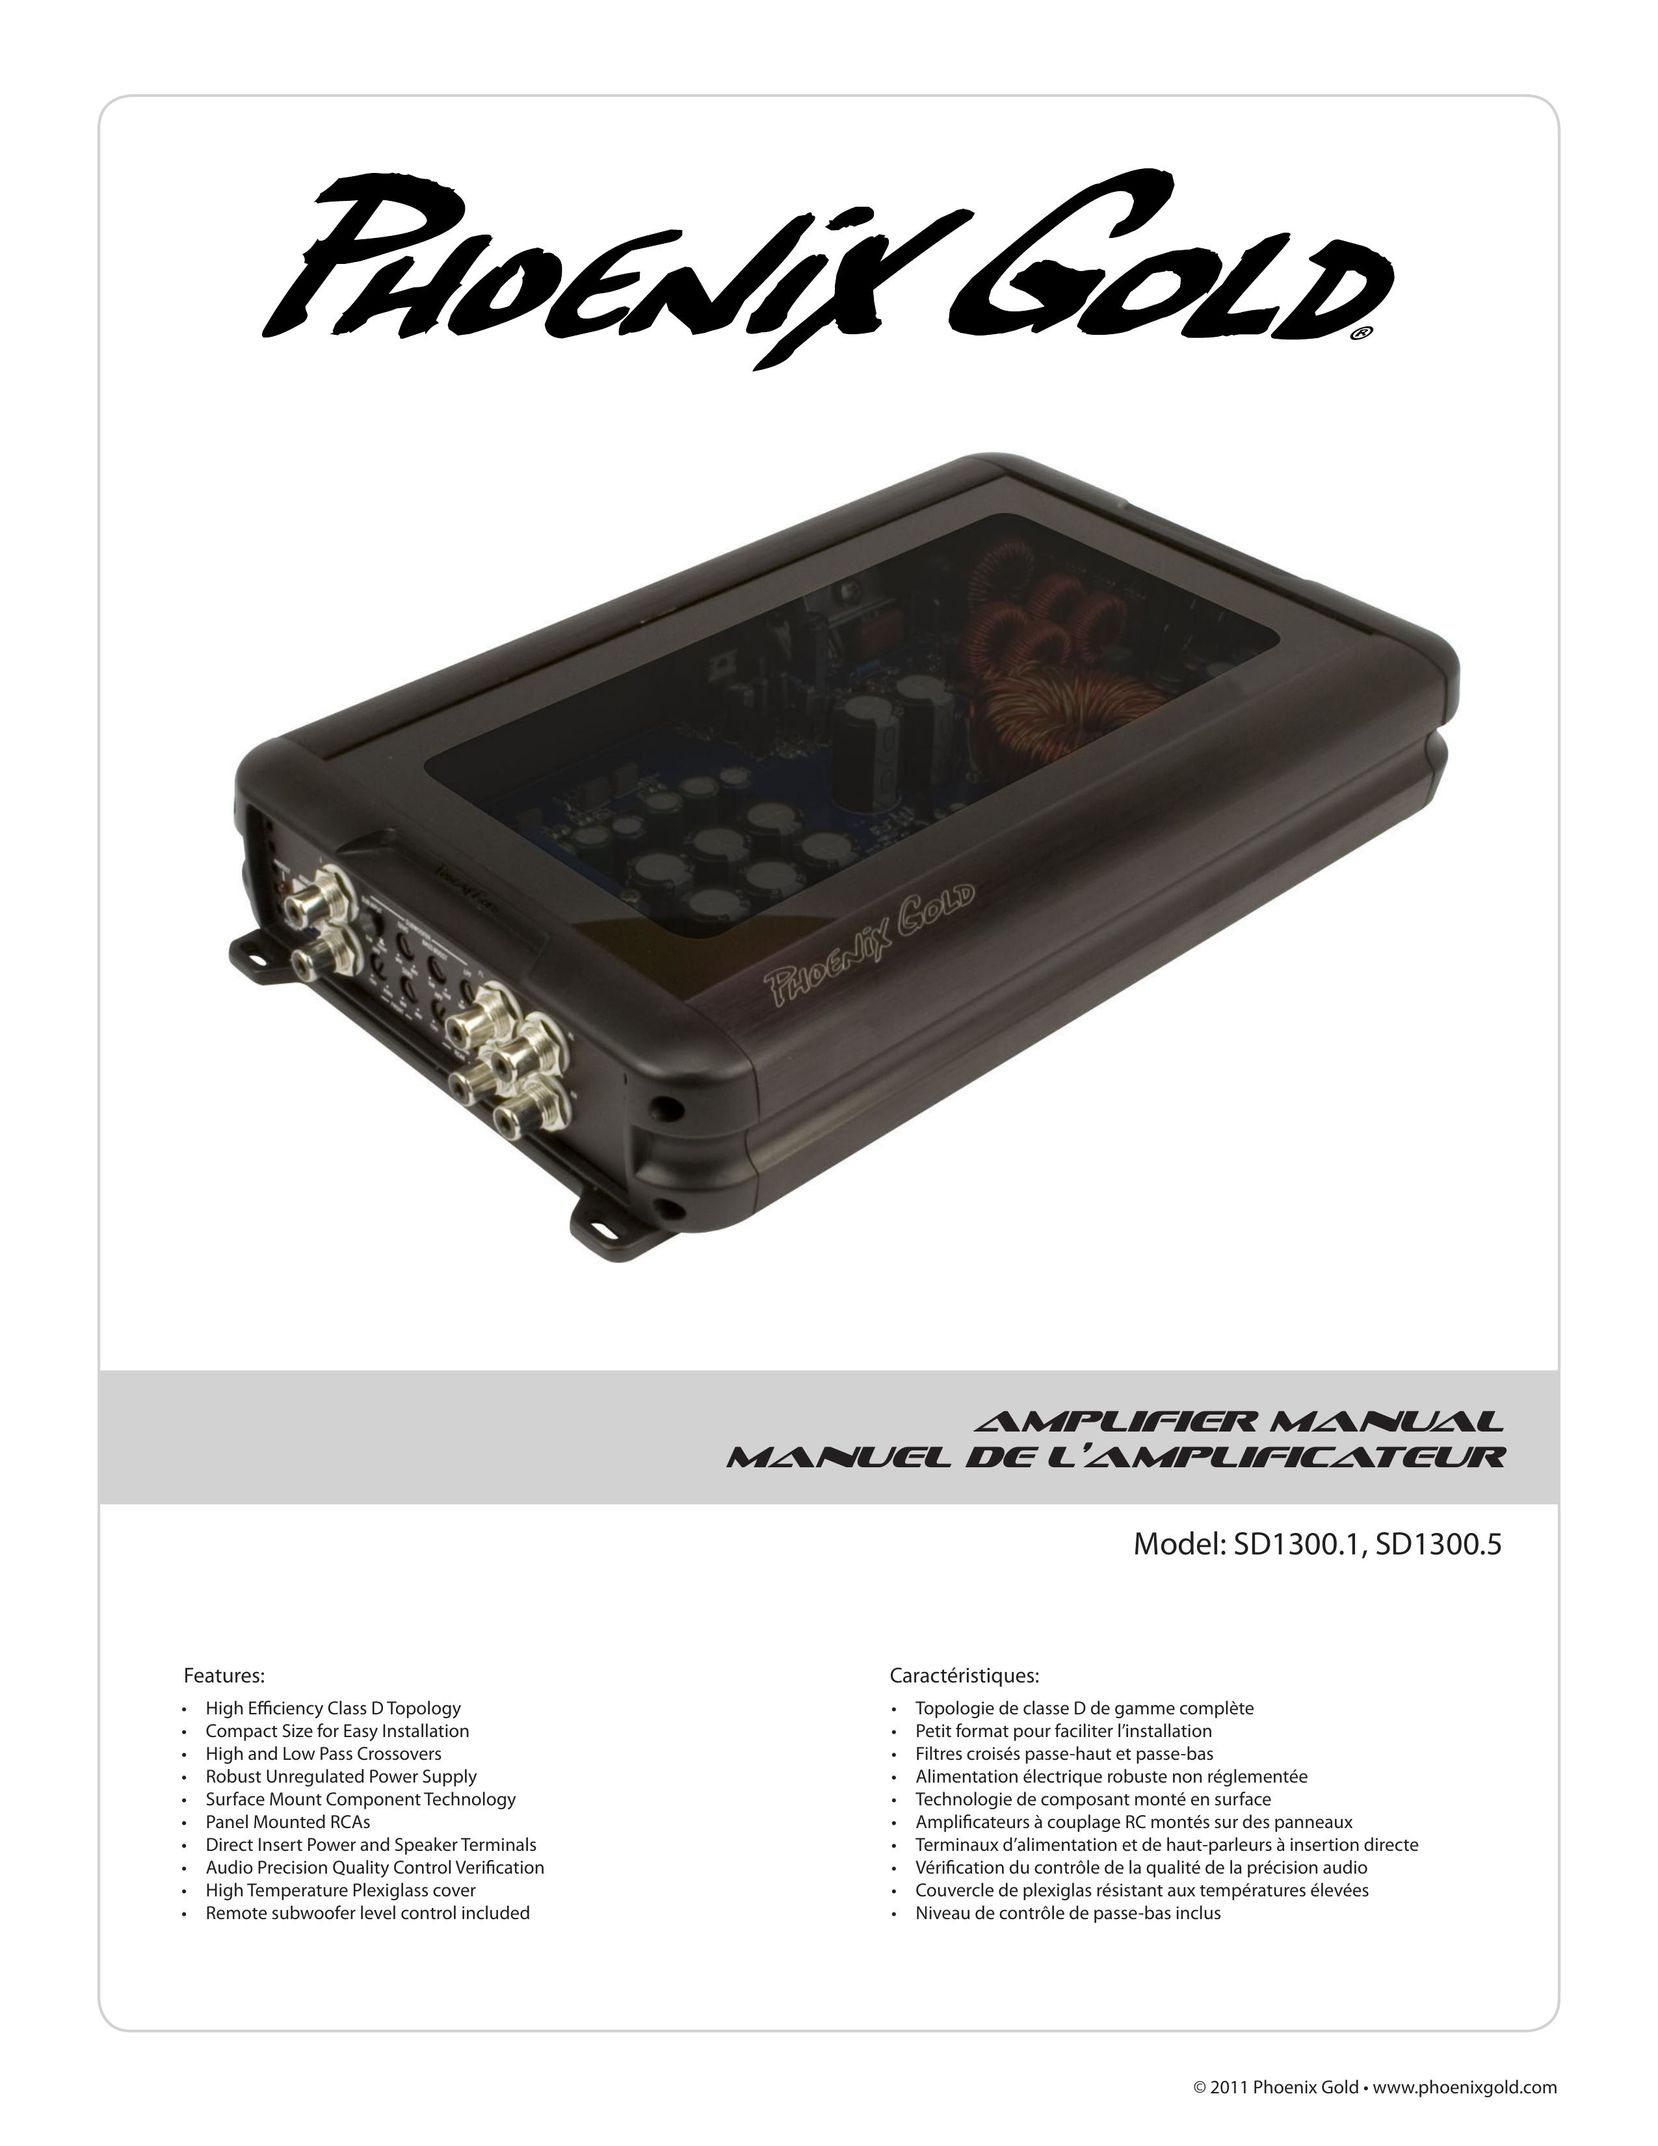 Phoenix Gold SD1300.1 Car Amplifier User Manual